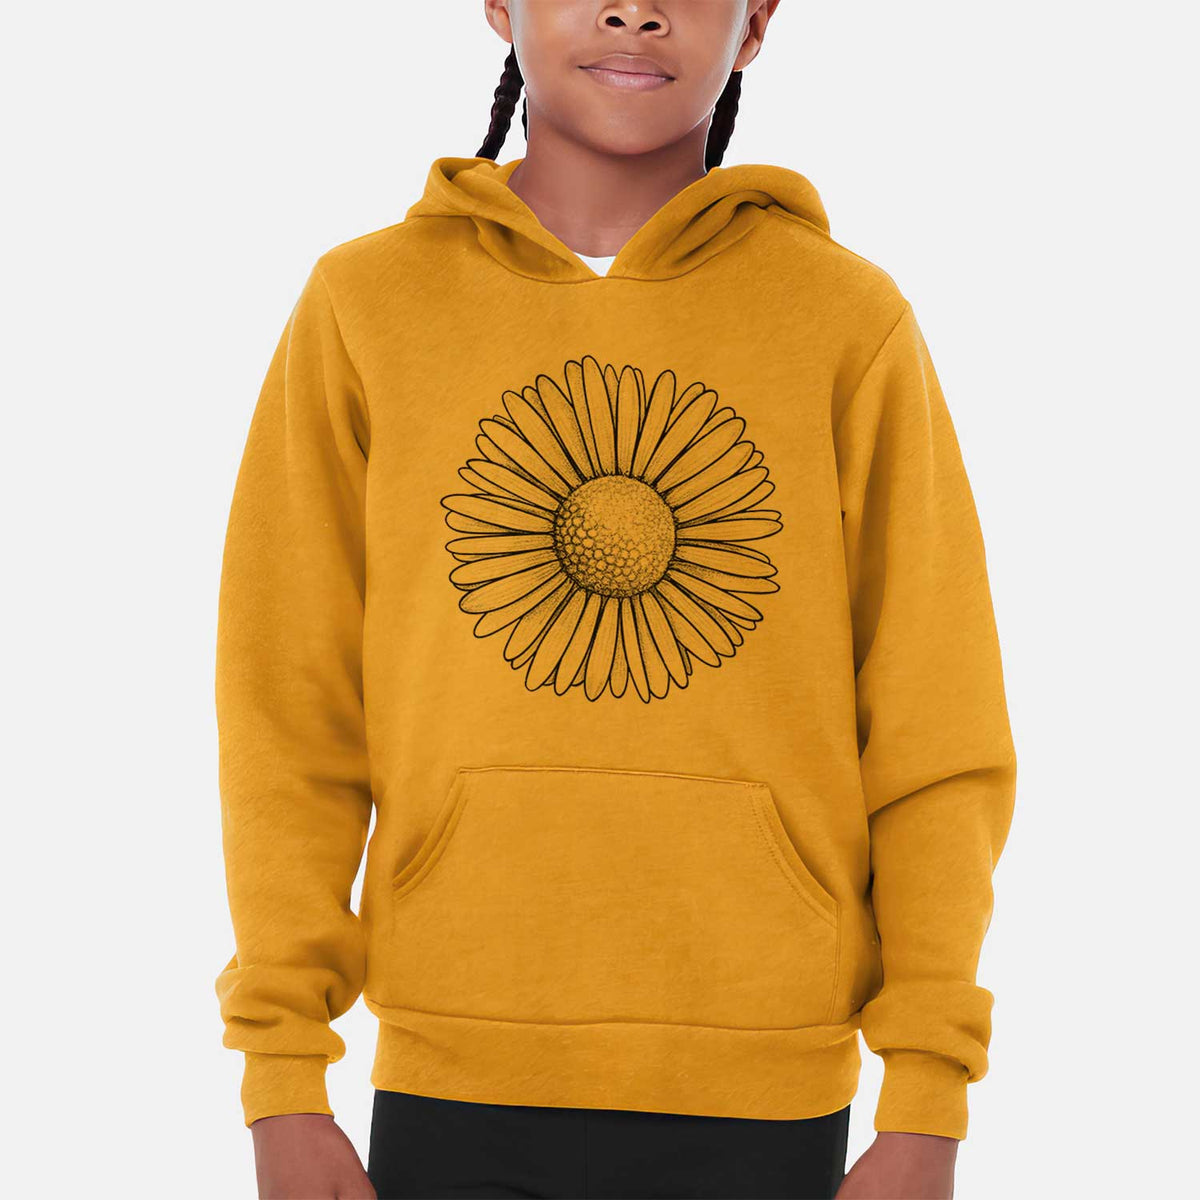 Bellis perennis - The Common Daisy - Youth Hoodie Sweatshirt